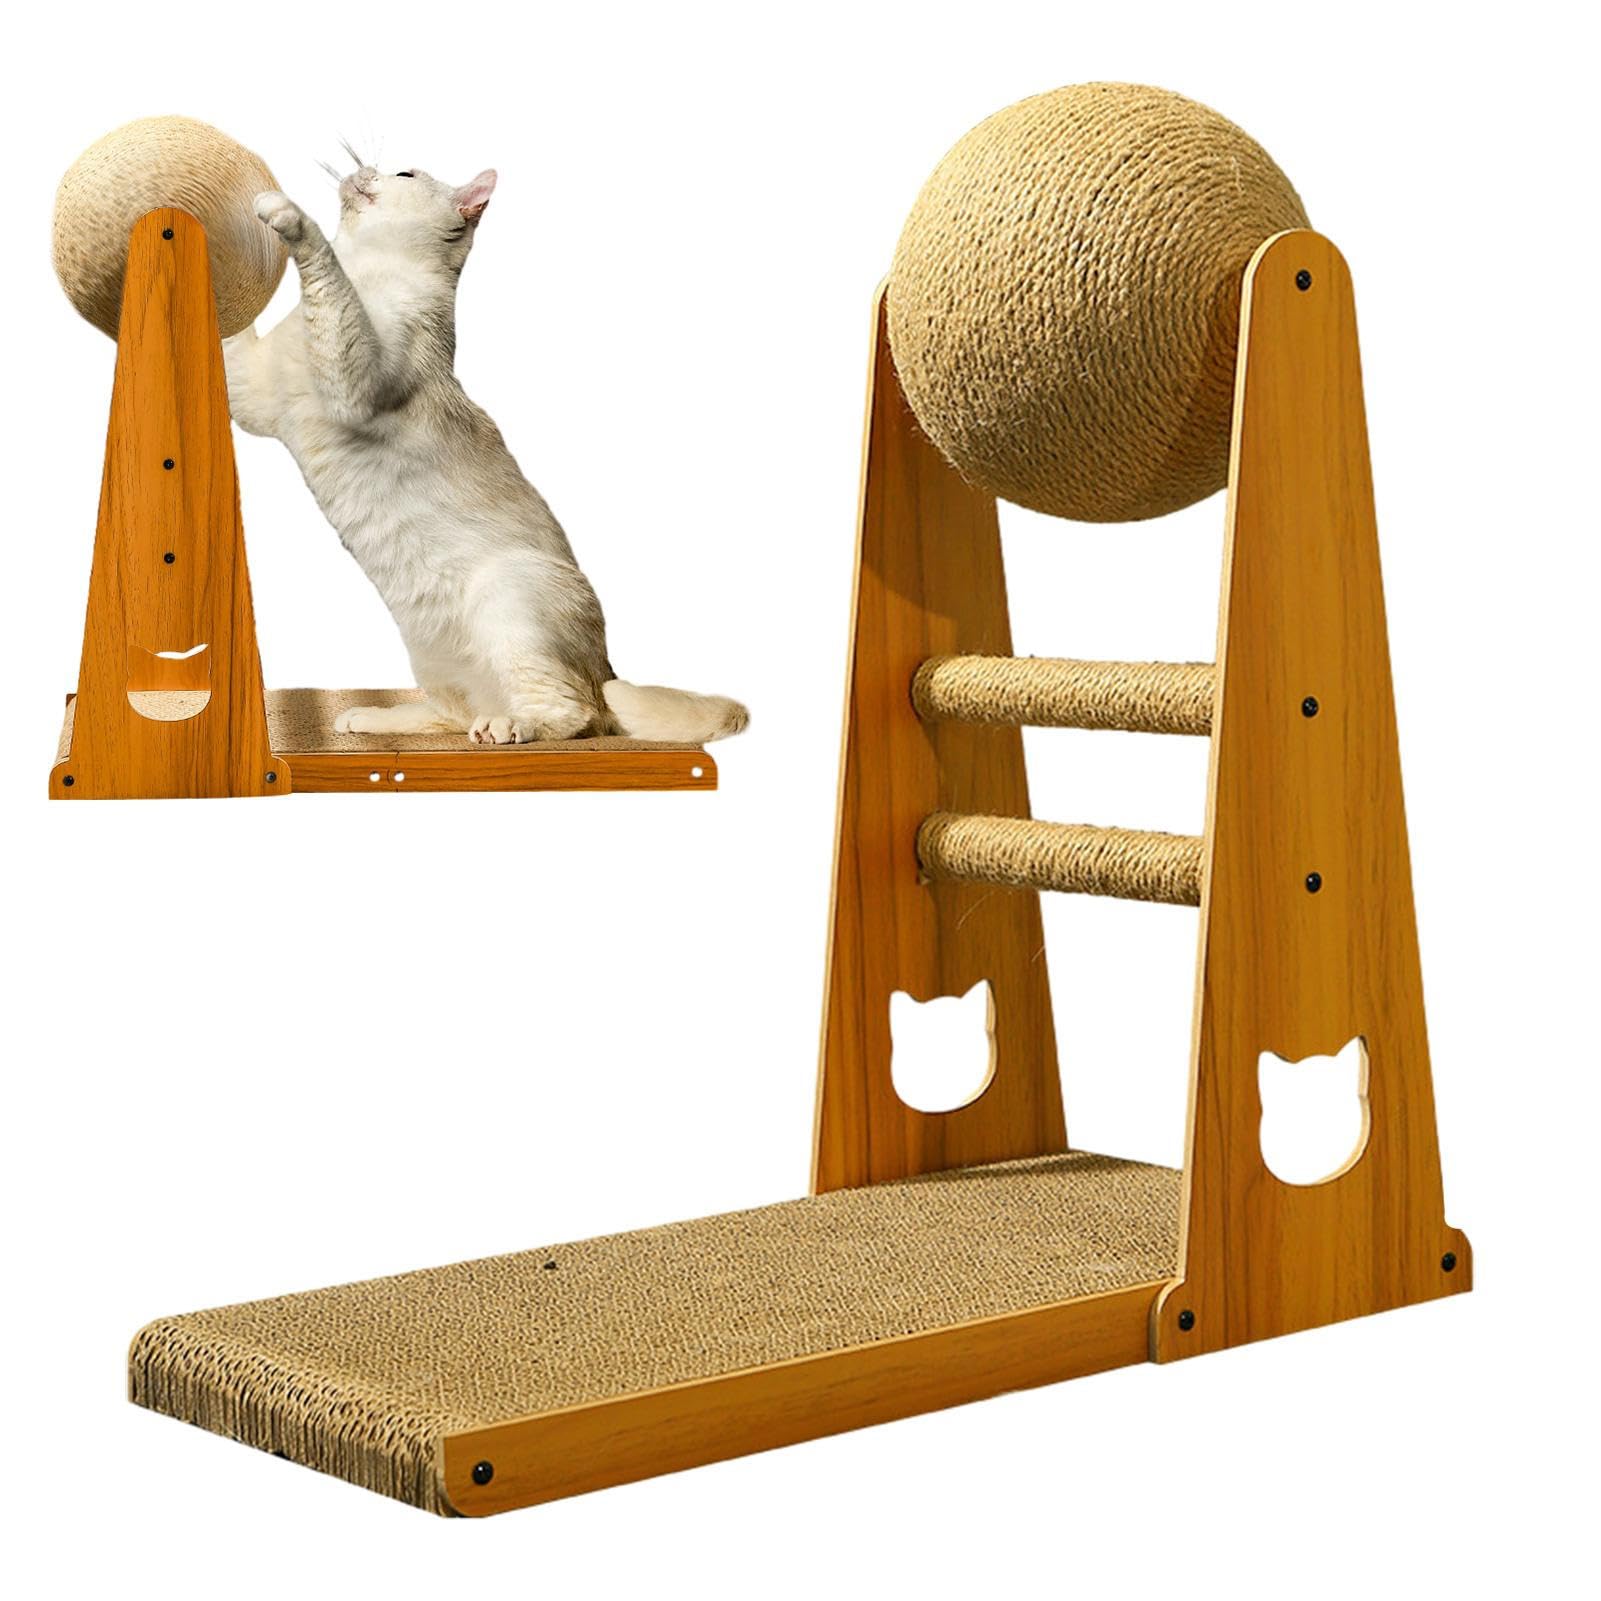 L-förmiger Katzenkratzer | Stilvoller Sisal-Kratzball für Katzen | Verdickter Katzenkratzbaum, vertikaler Katzenkratzer, abnehmbare Katzenmöbel für Katzenschleifkrallen Hmltd